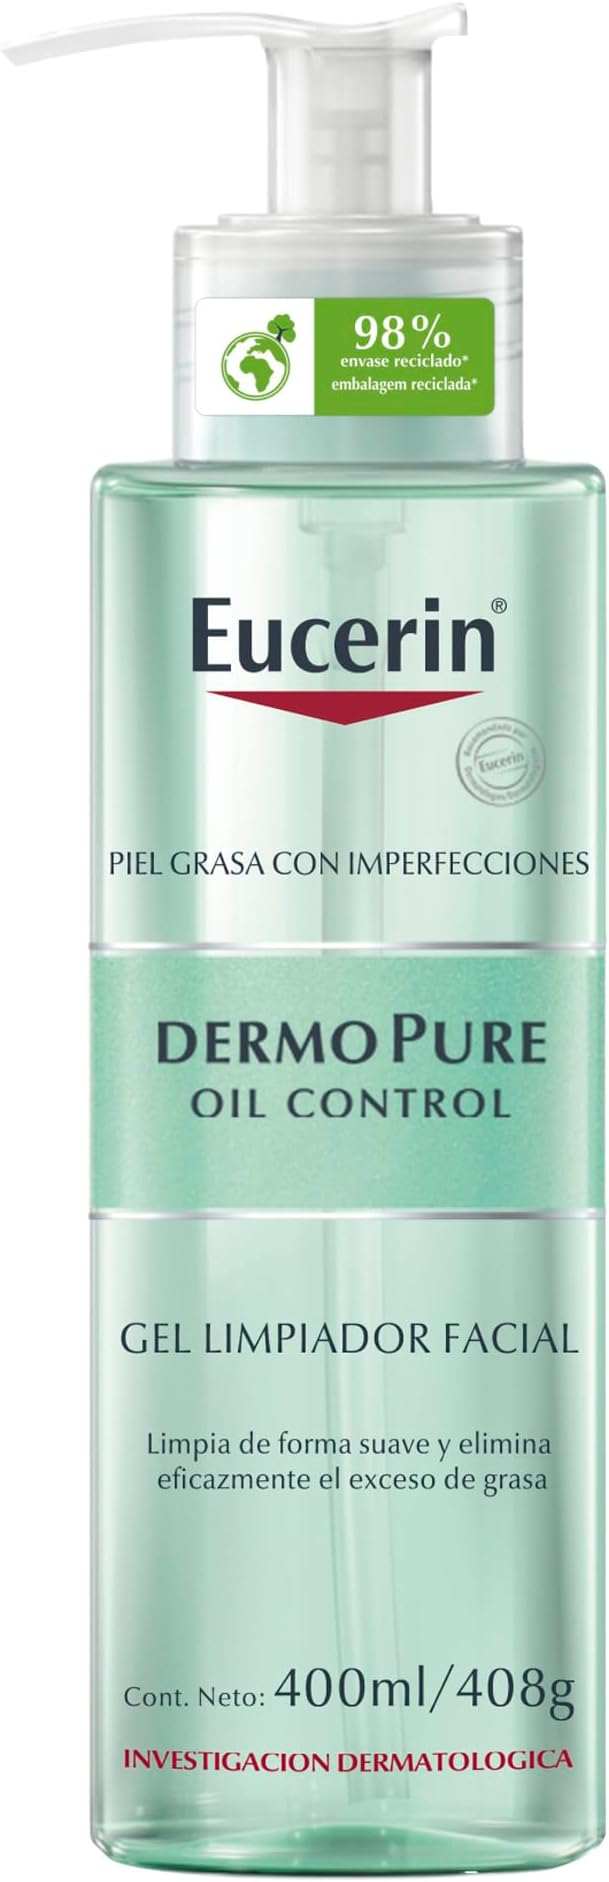 Eucerin DermoPure Oil control gel limpiador 400ml.